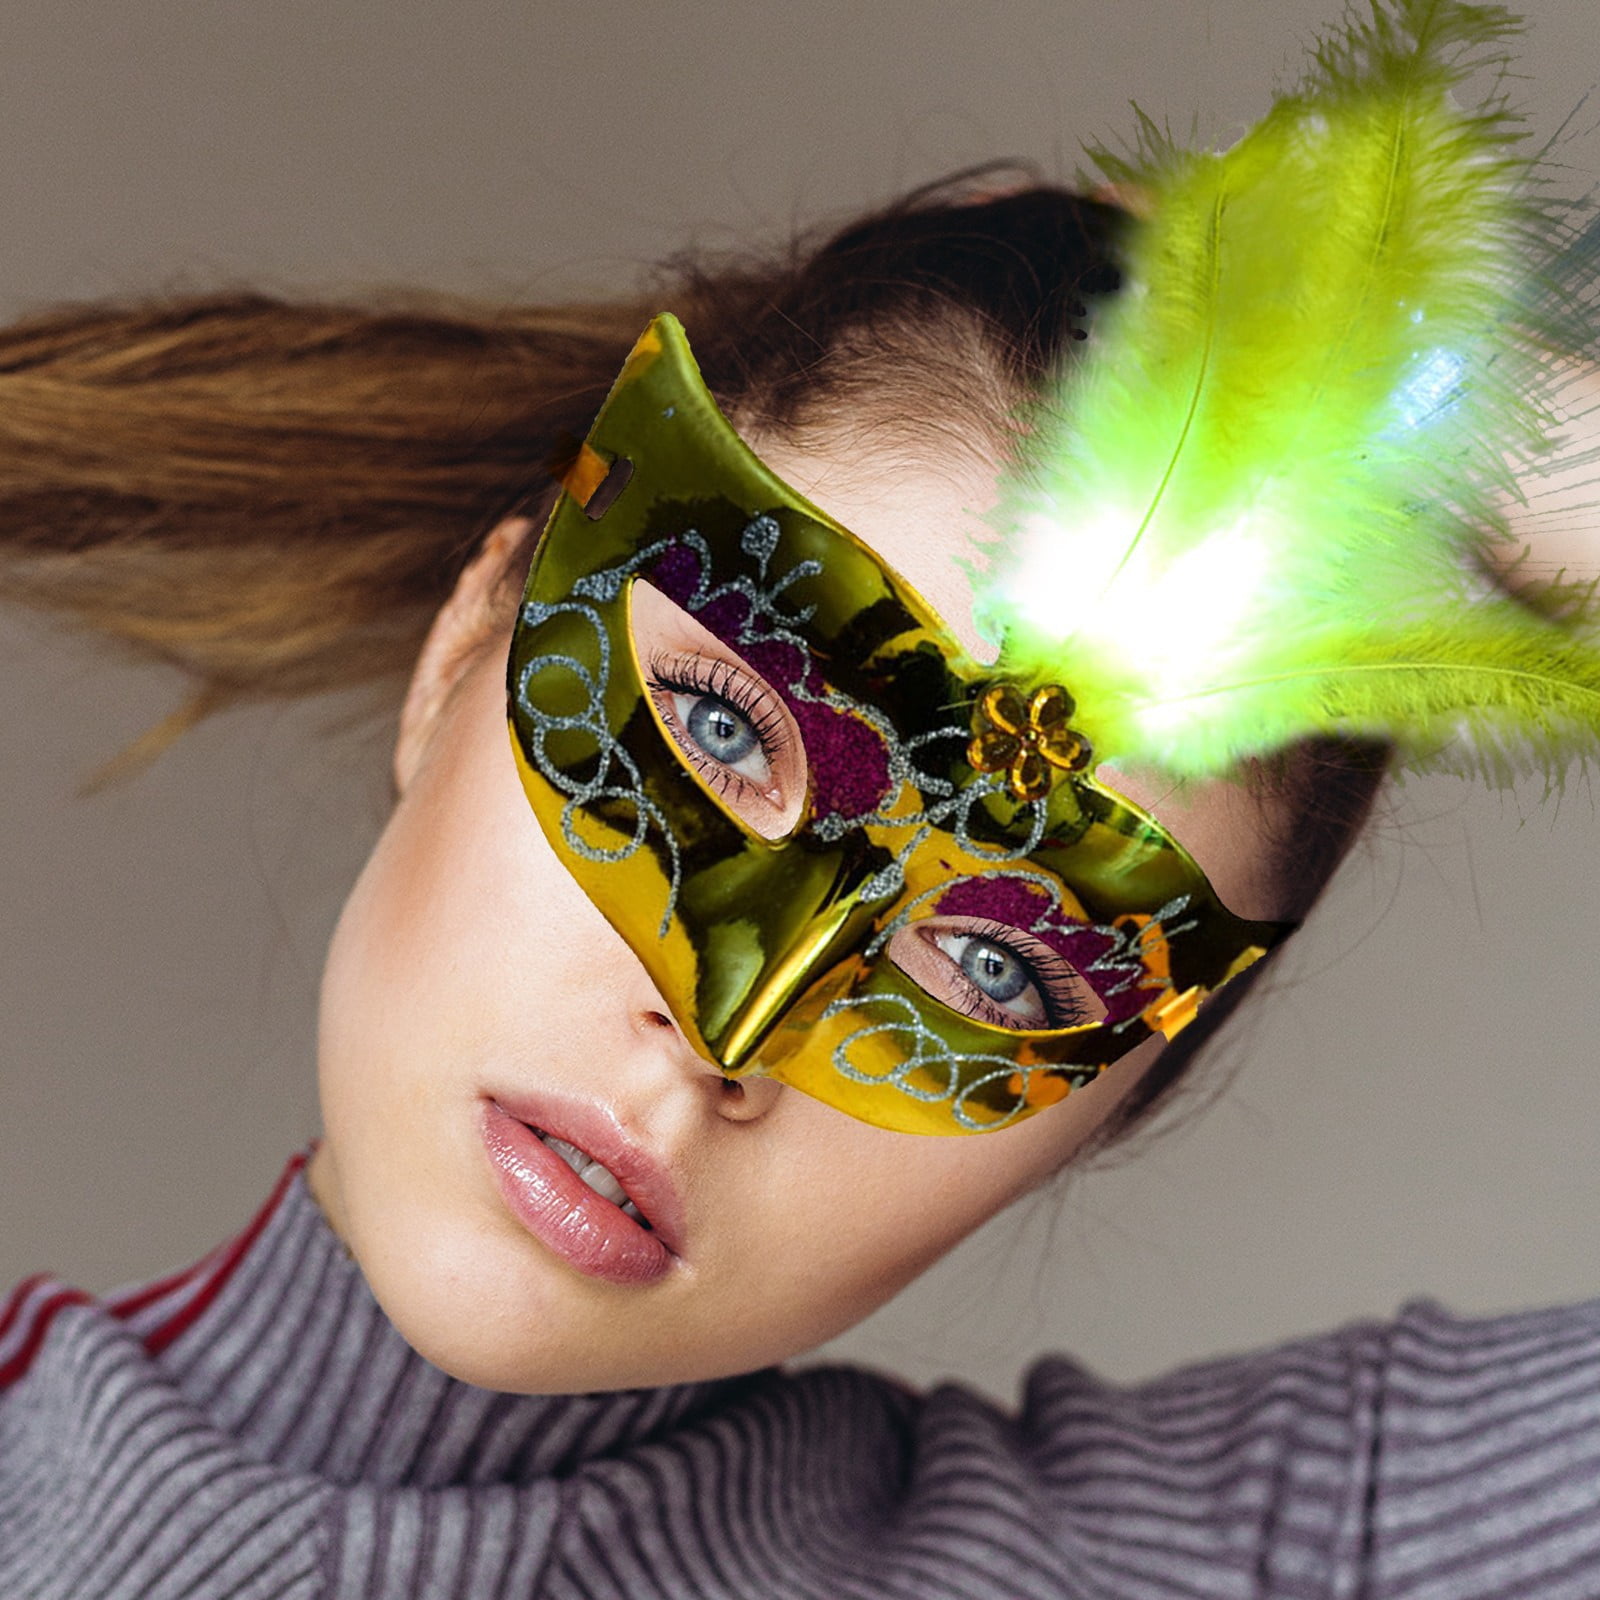 Women Venetian LEDFiber Mask Masquerade Fancy Dress Party Princess Feather Masks 